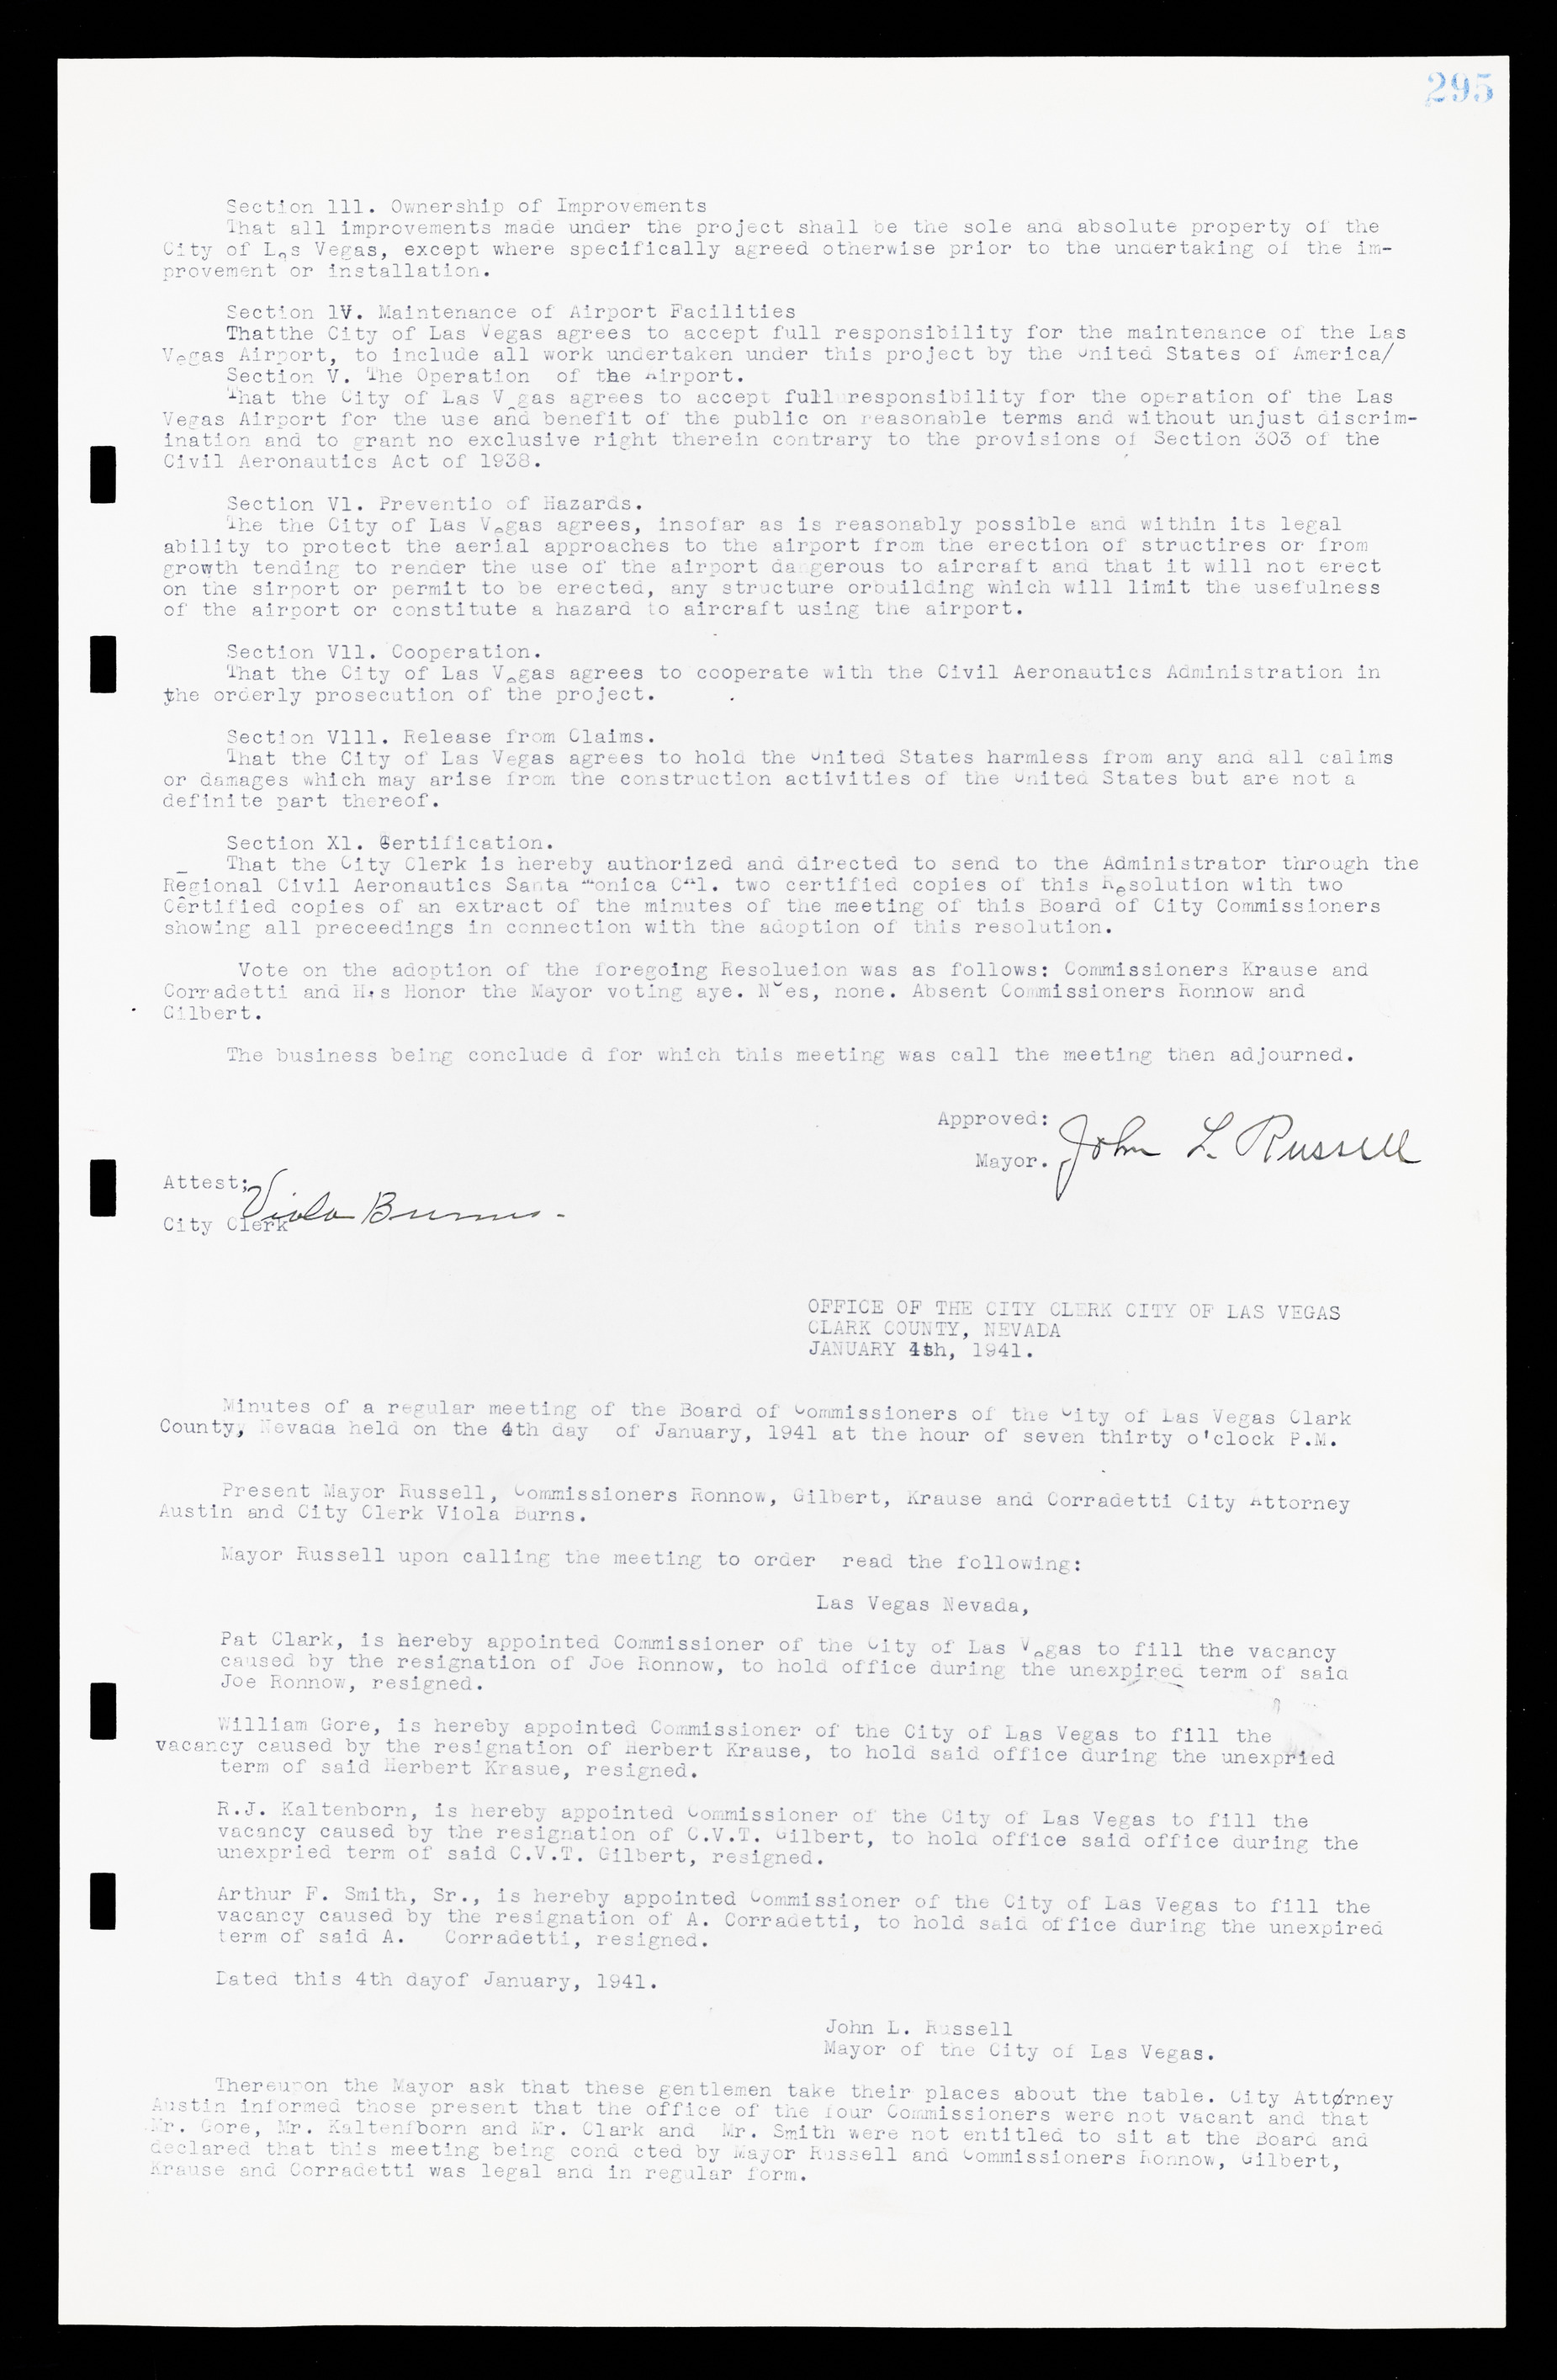 Las Vegas City Commission Minutes, February 17, 1937 to August 4, 1942, lvc000004-319